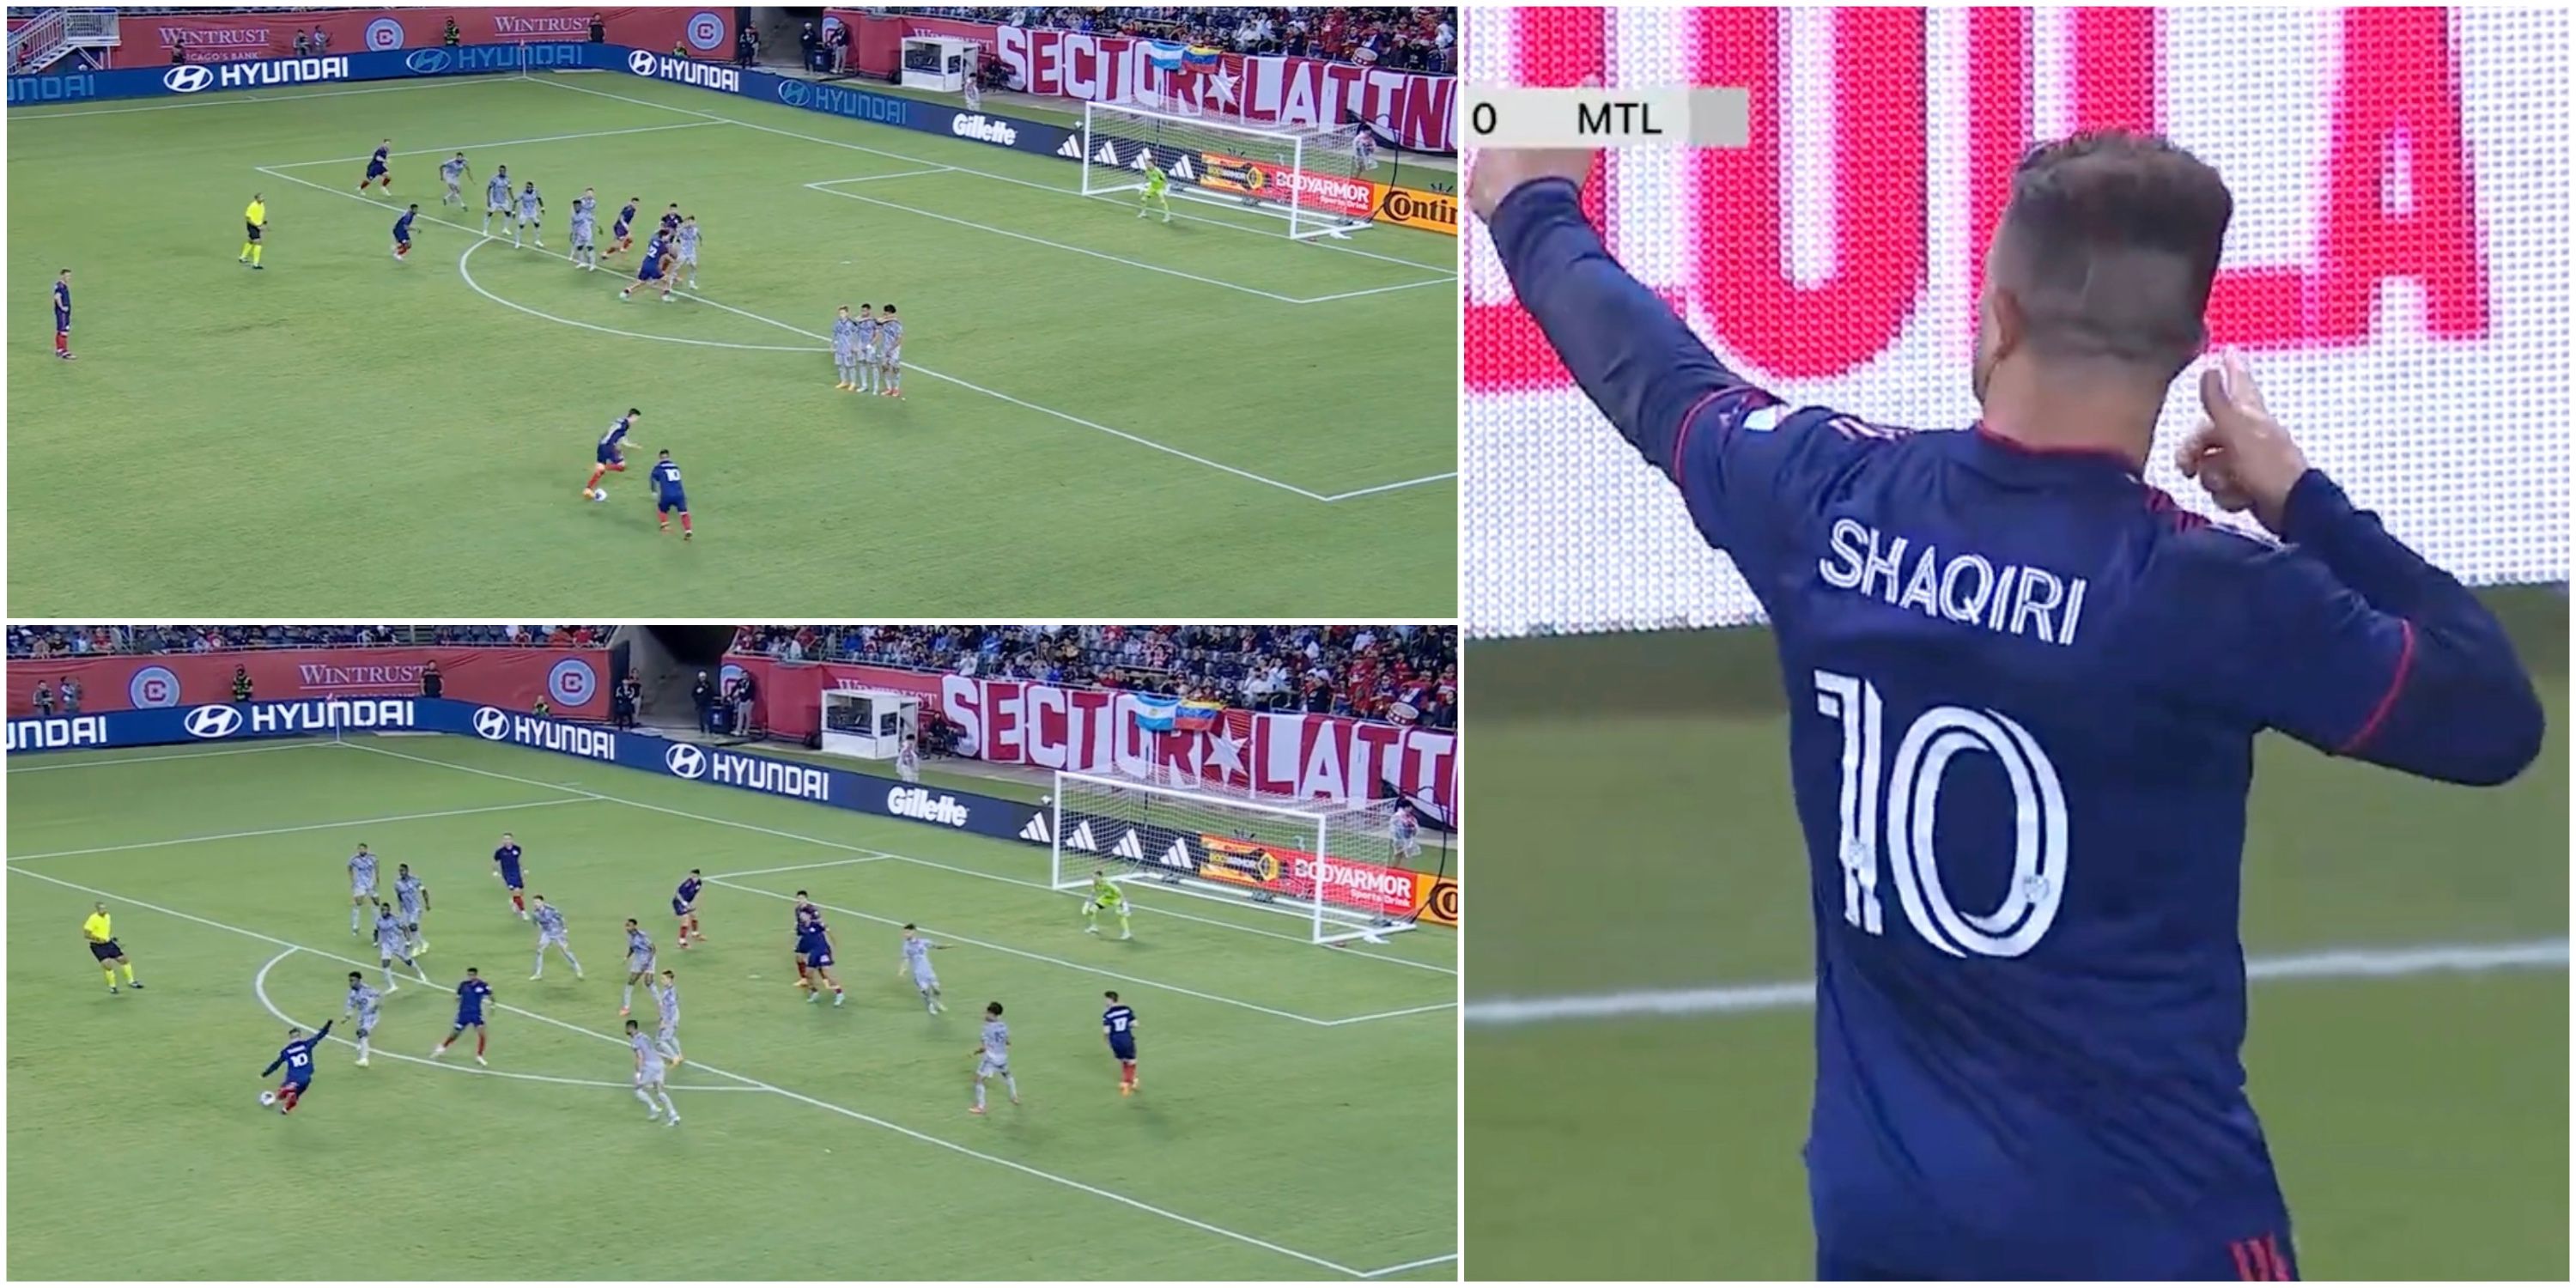 Xherdan Shaqiri scores outrageous MLS goal after clever free-kick routine